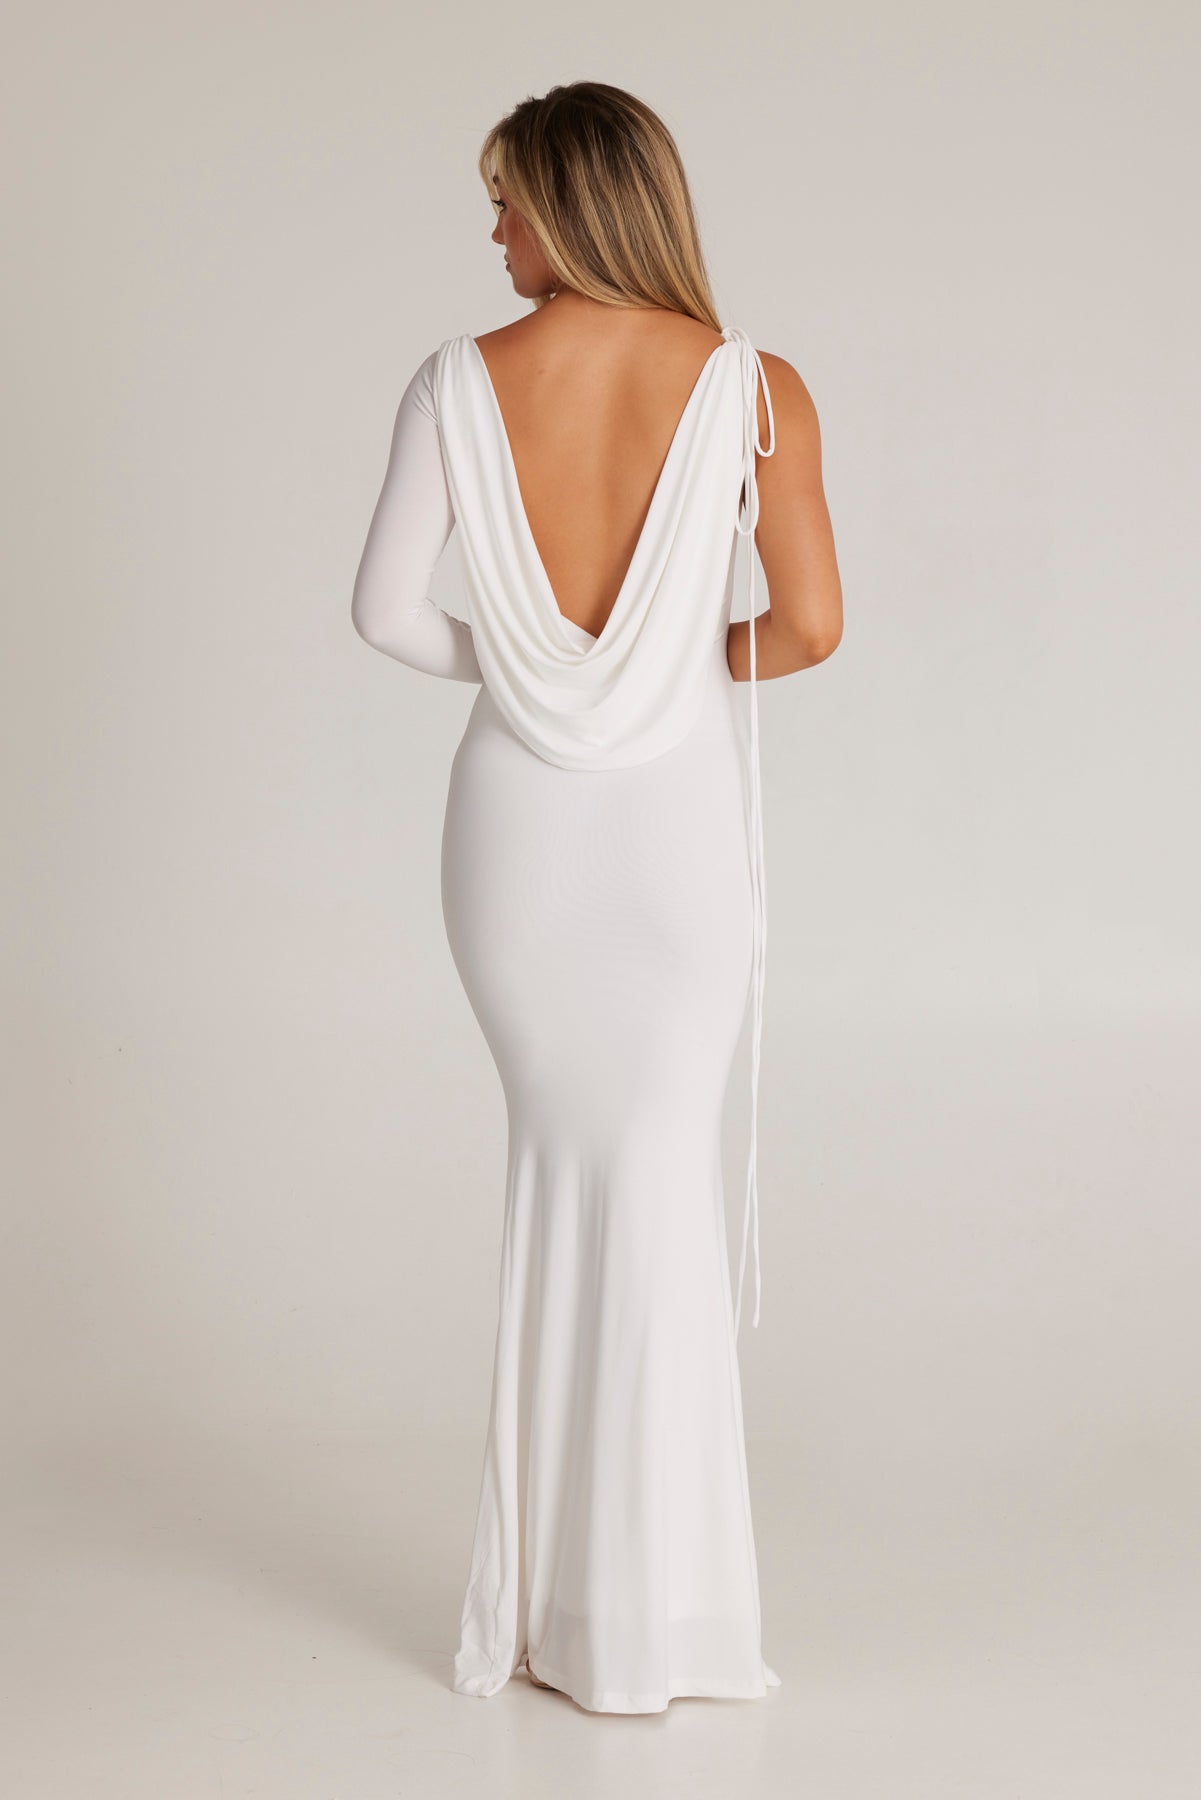 MÉLANI The Label EMILIA White Reversible One Sleeve Dress